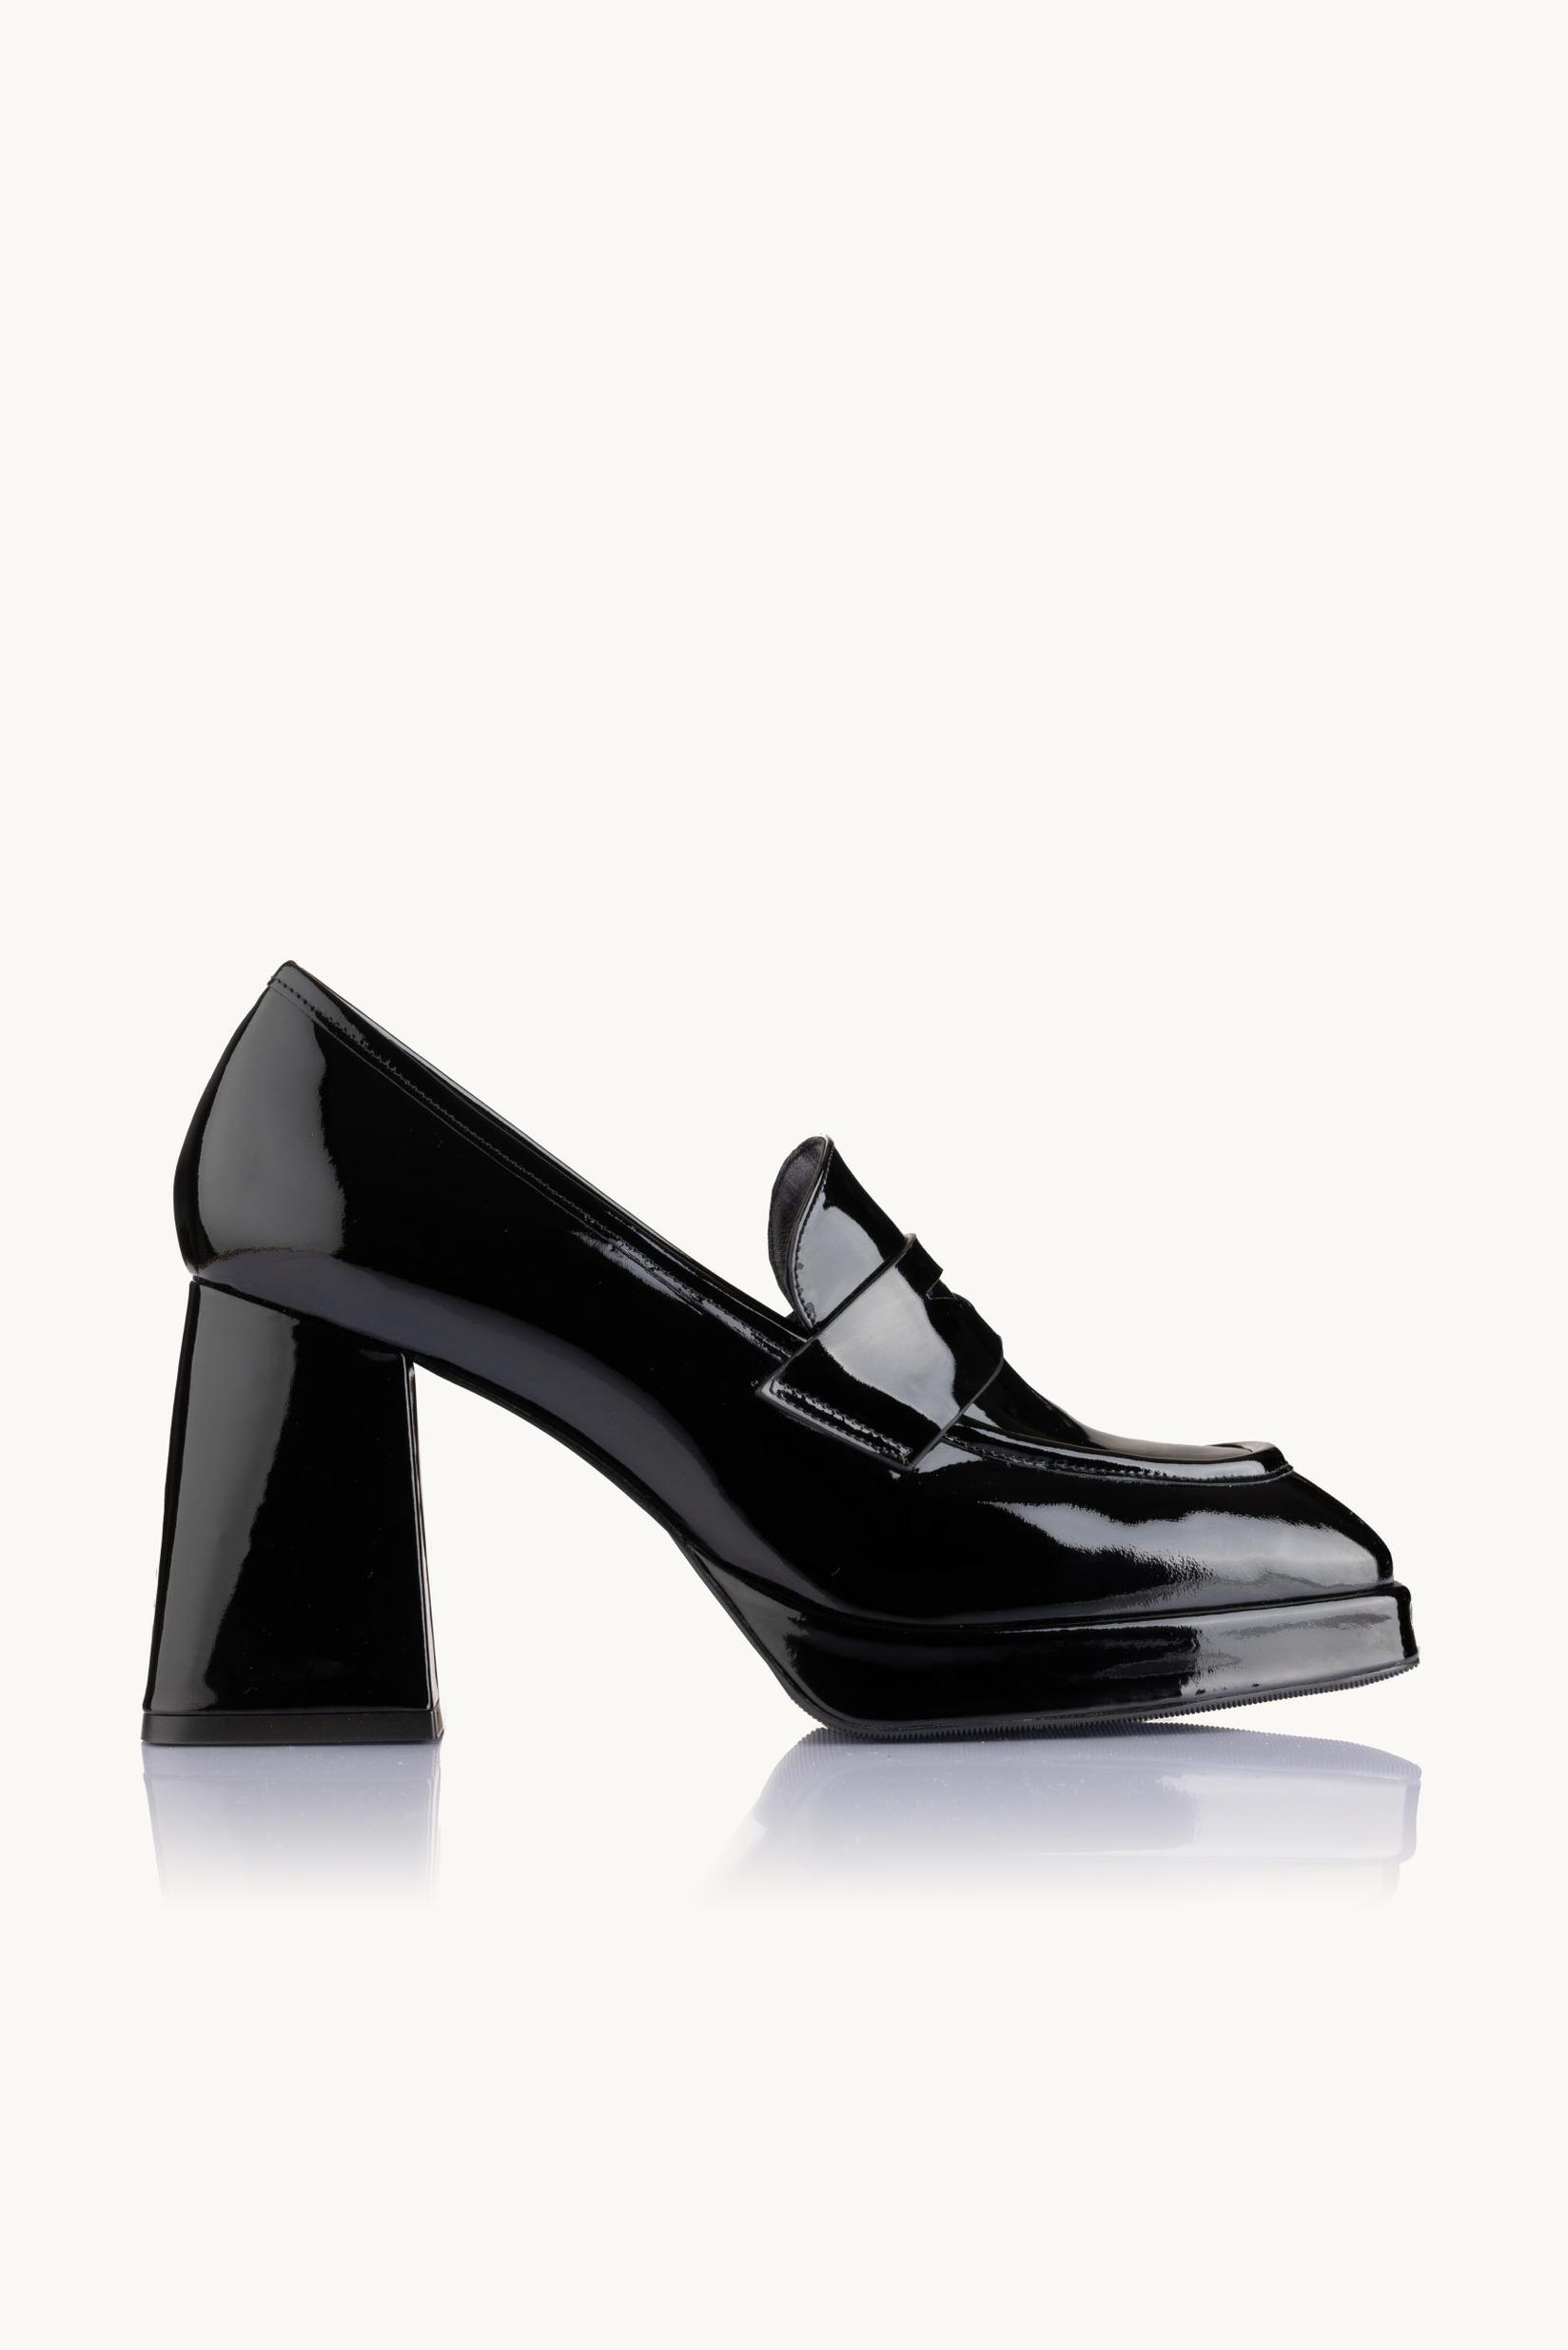 NAKA Ženske cipele Starlit Sparkle crne